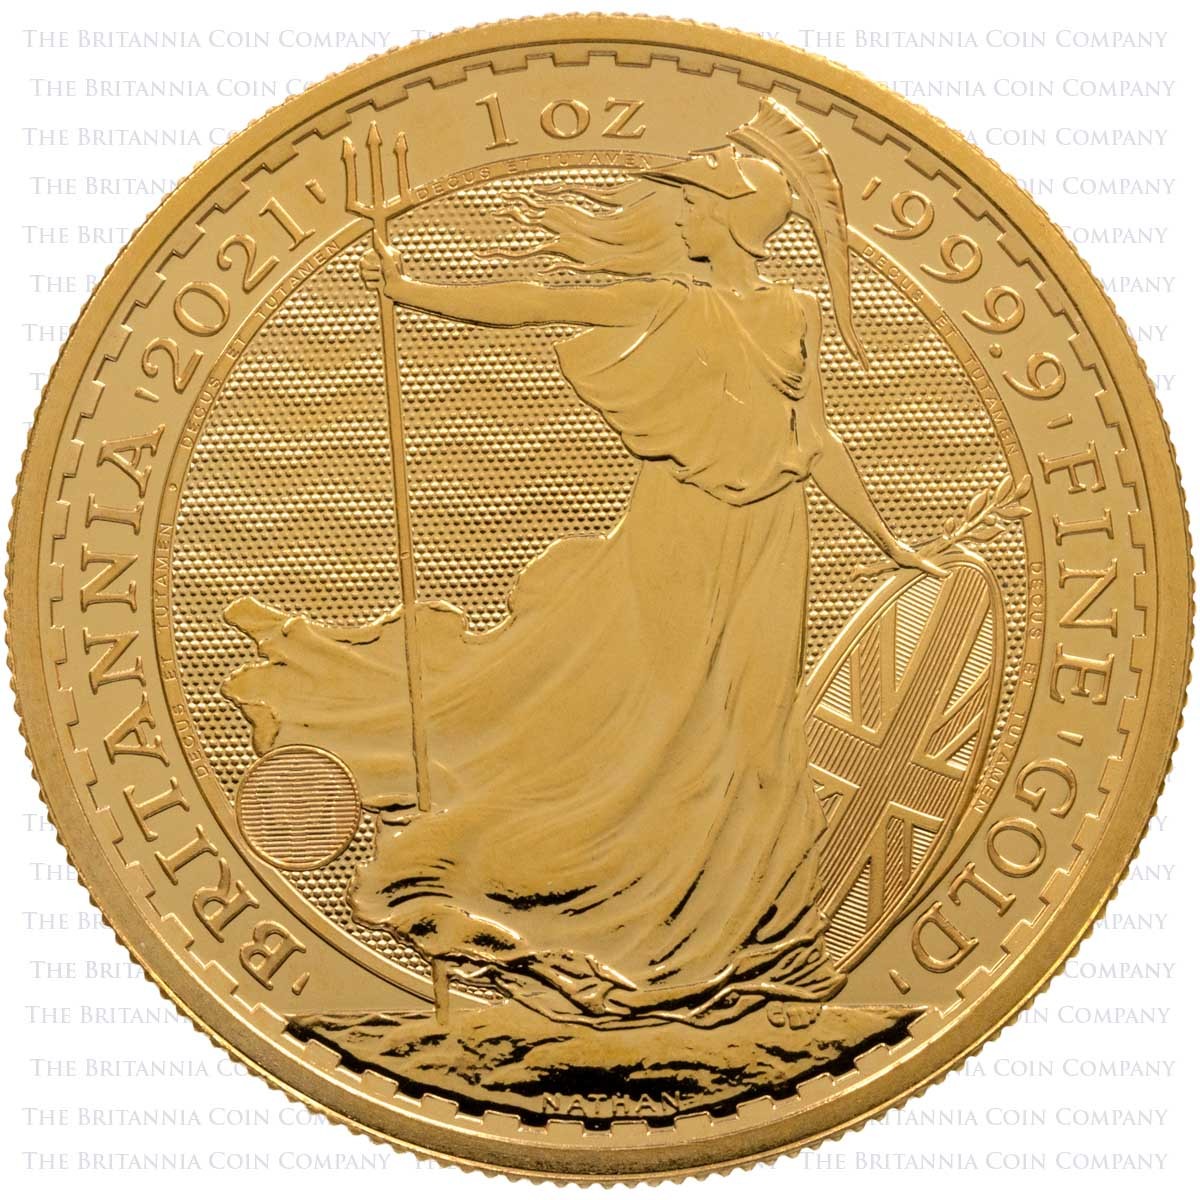 One Ounce 24 Carat Gold Mixed-Date Britannia Bullion Coins (Best Value) Reverse